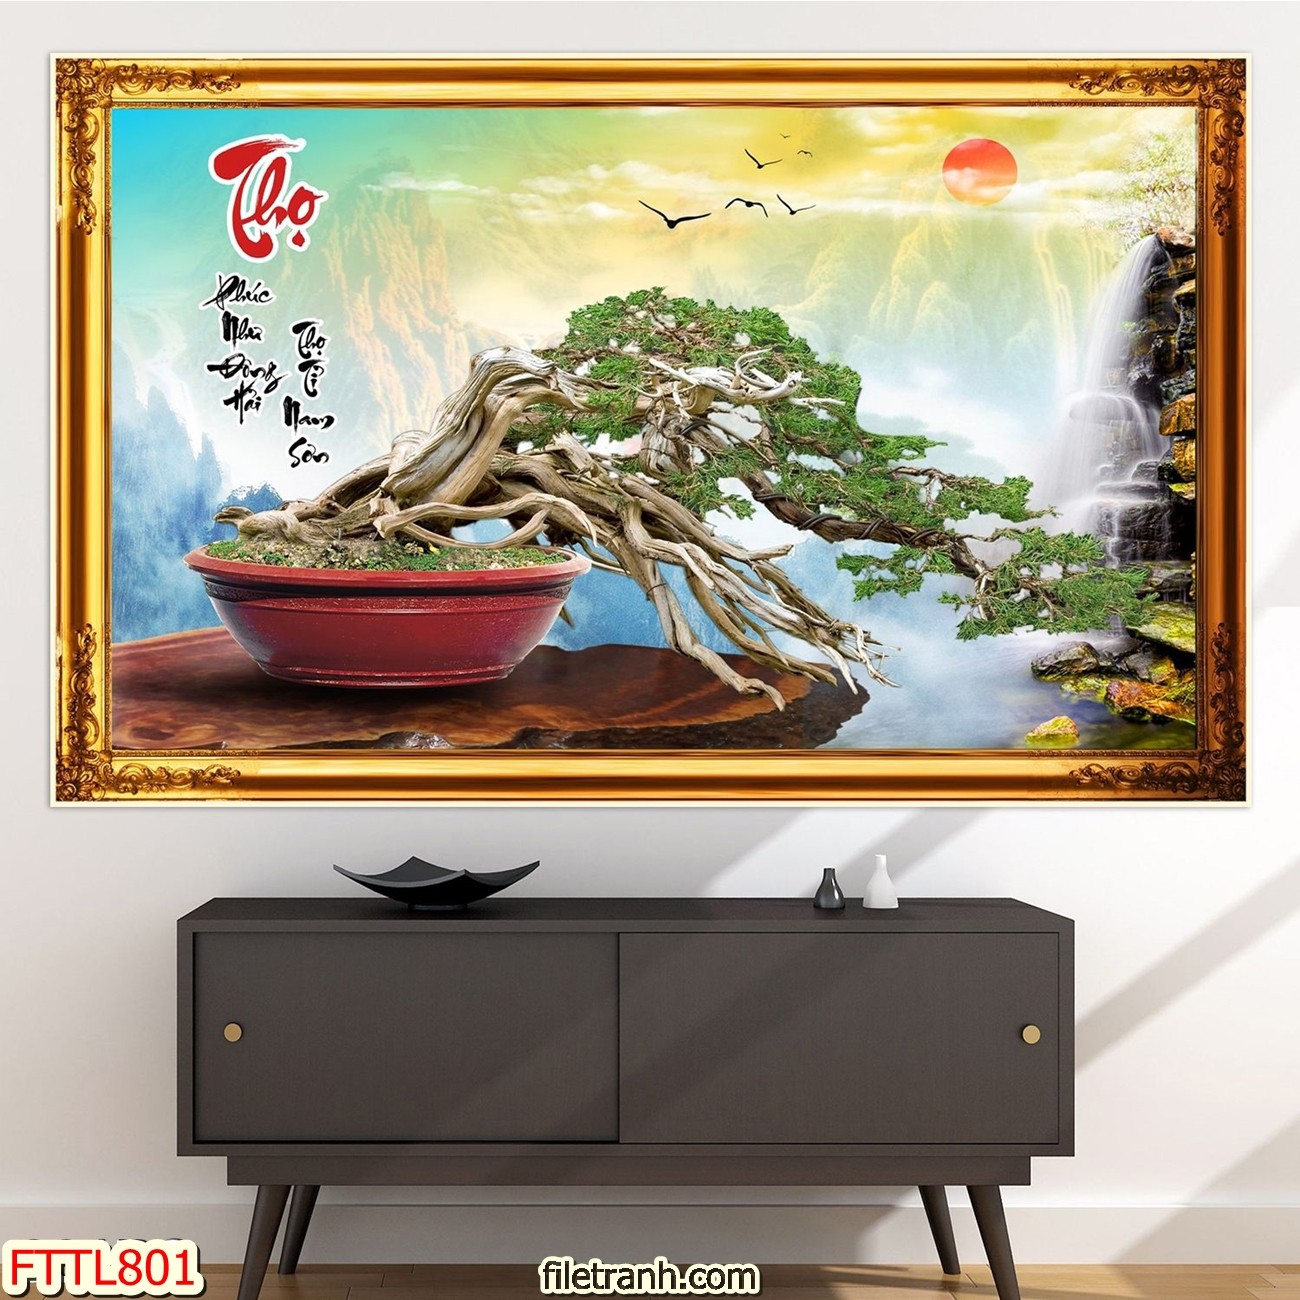 https://filetranh.com/file-tranh-chau-mai-bonsai/file-tranh-chau-mai-bonsai-fttl801.html